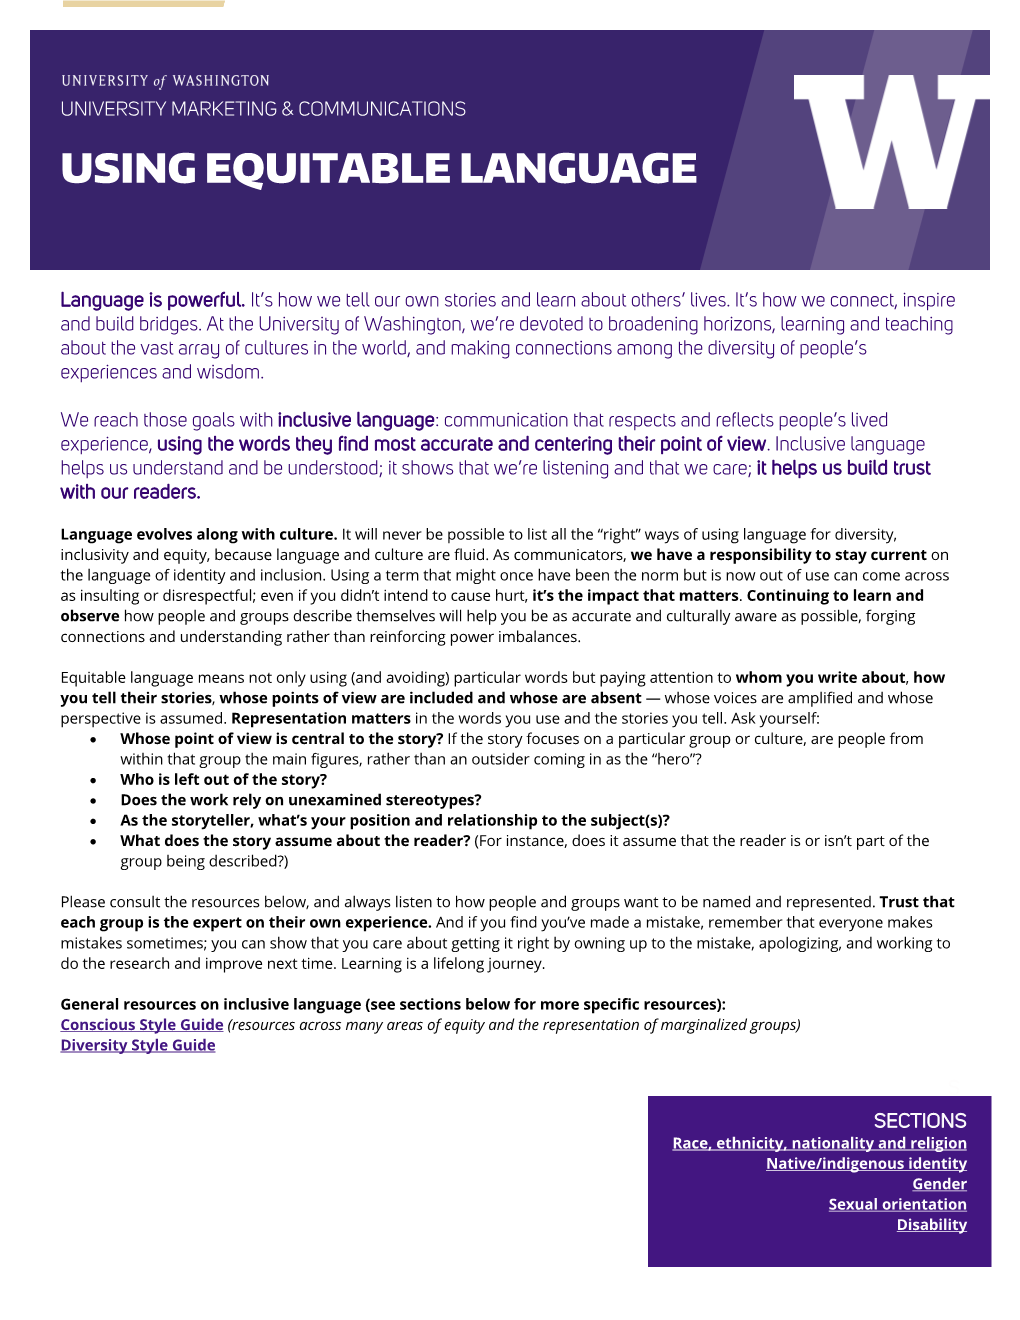 Using Equitable Language